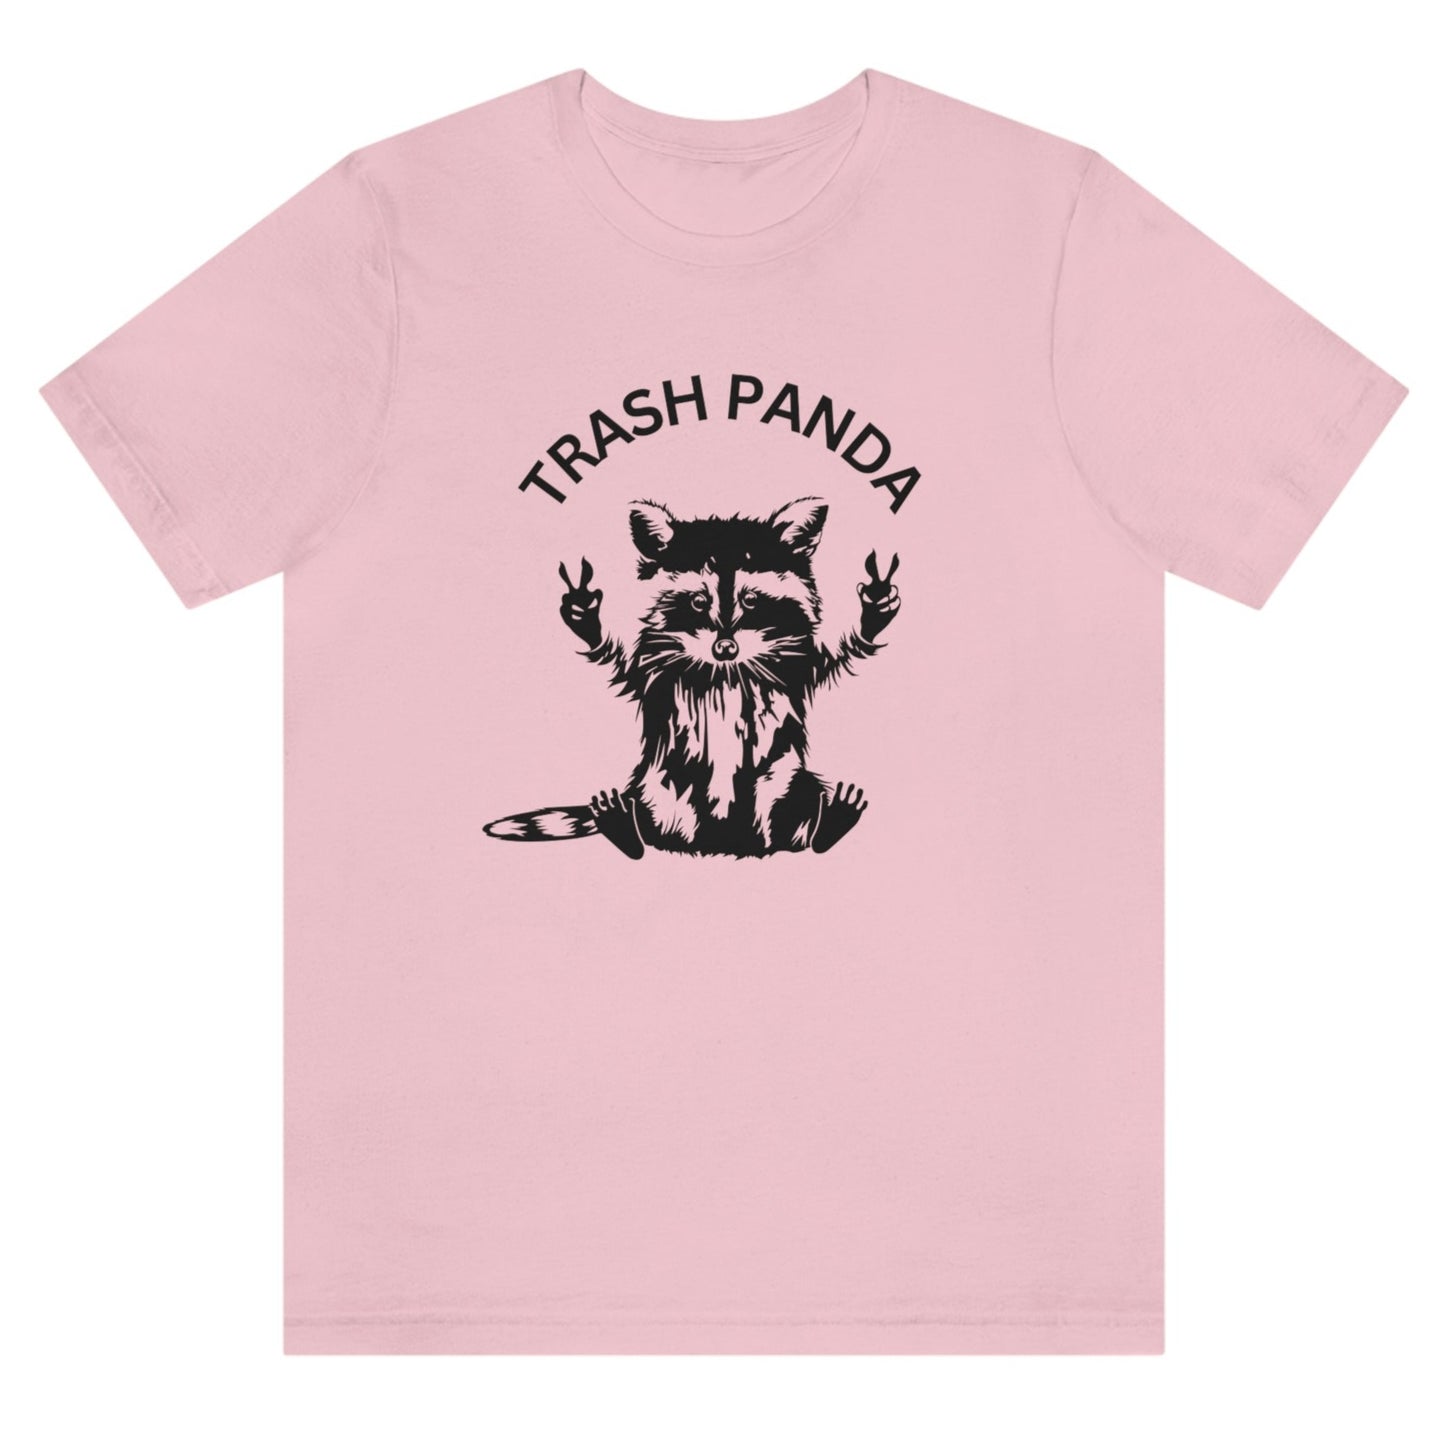 trash-panda-racoon-pink-t-shirt-unisex